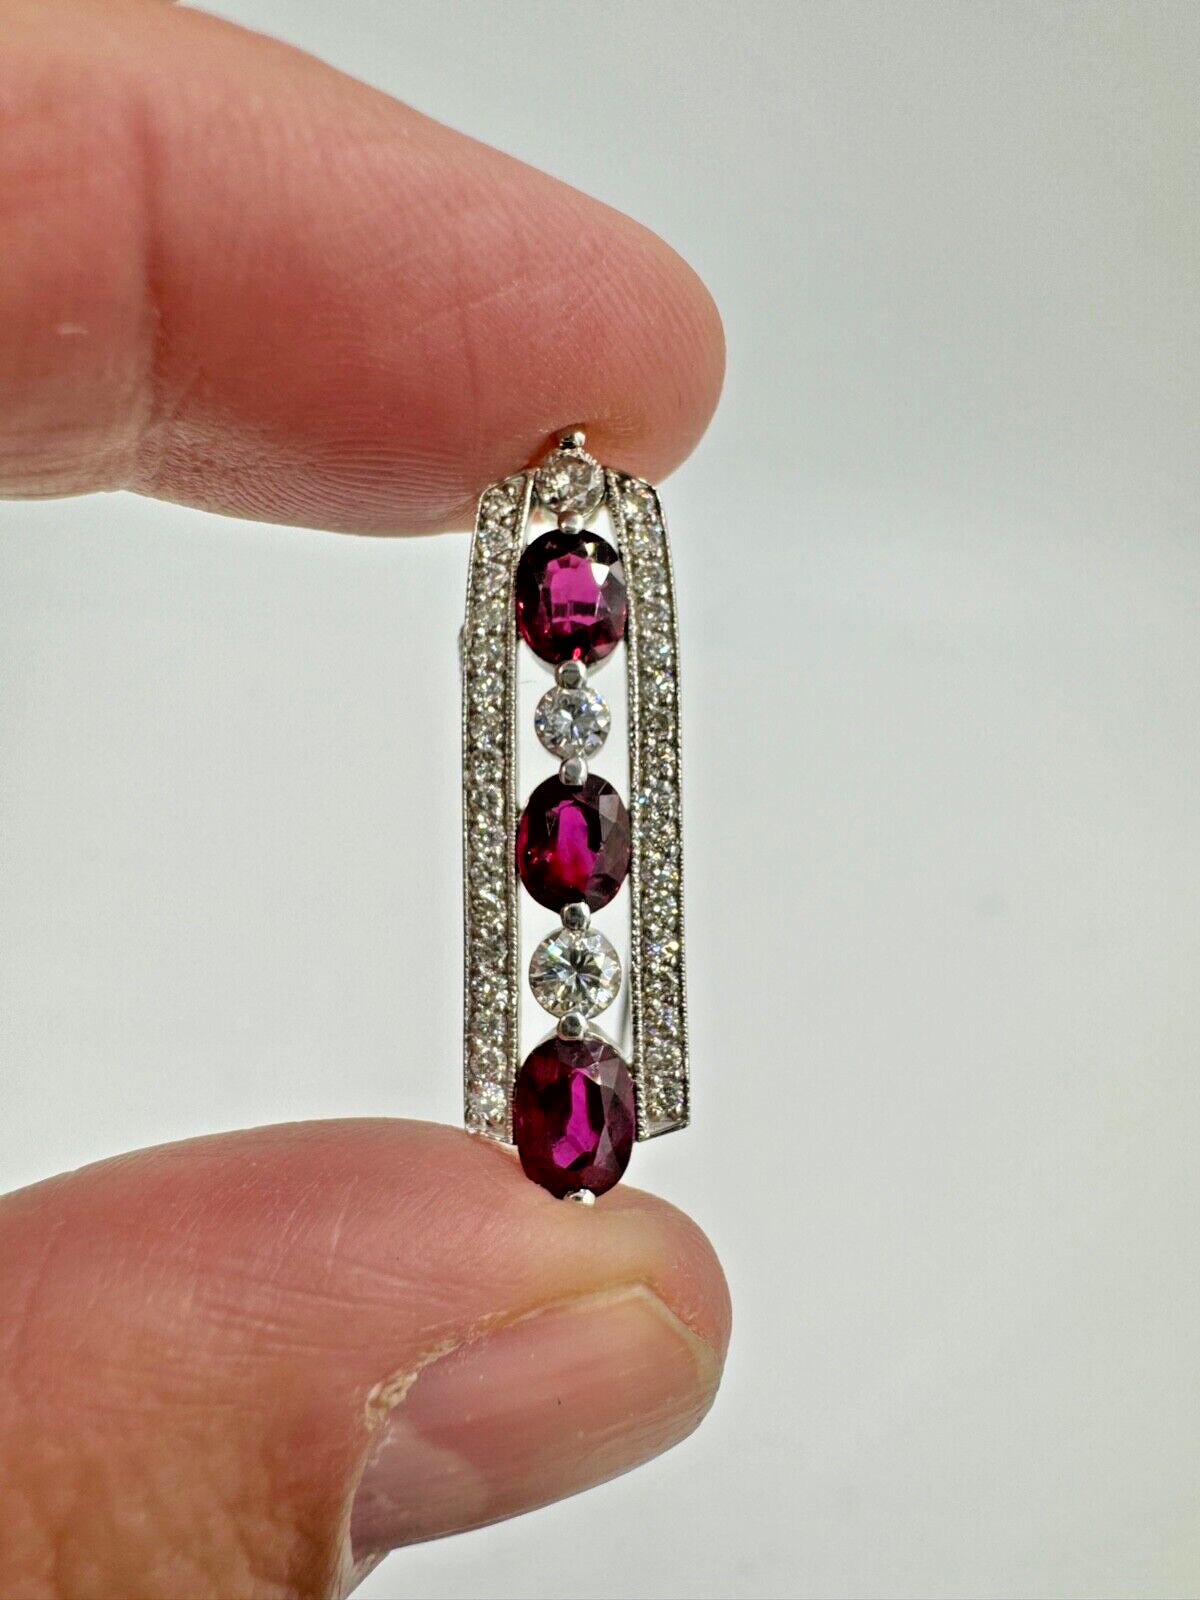 Custom Made White Gold Ruby Diamond Pendant Necklace